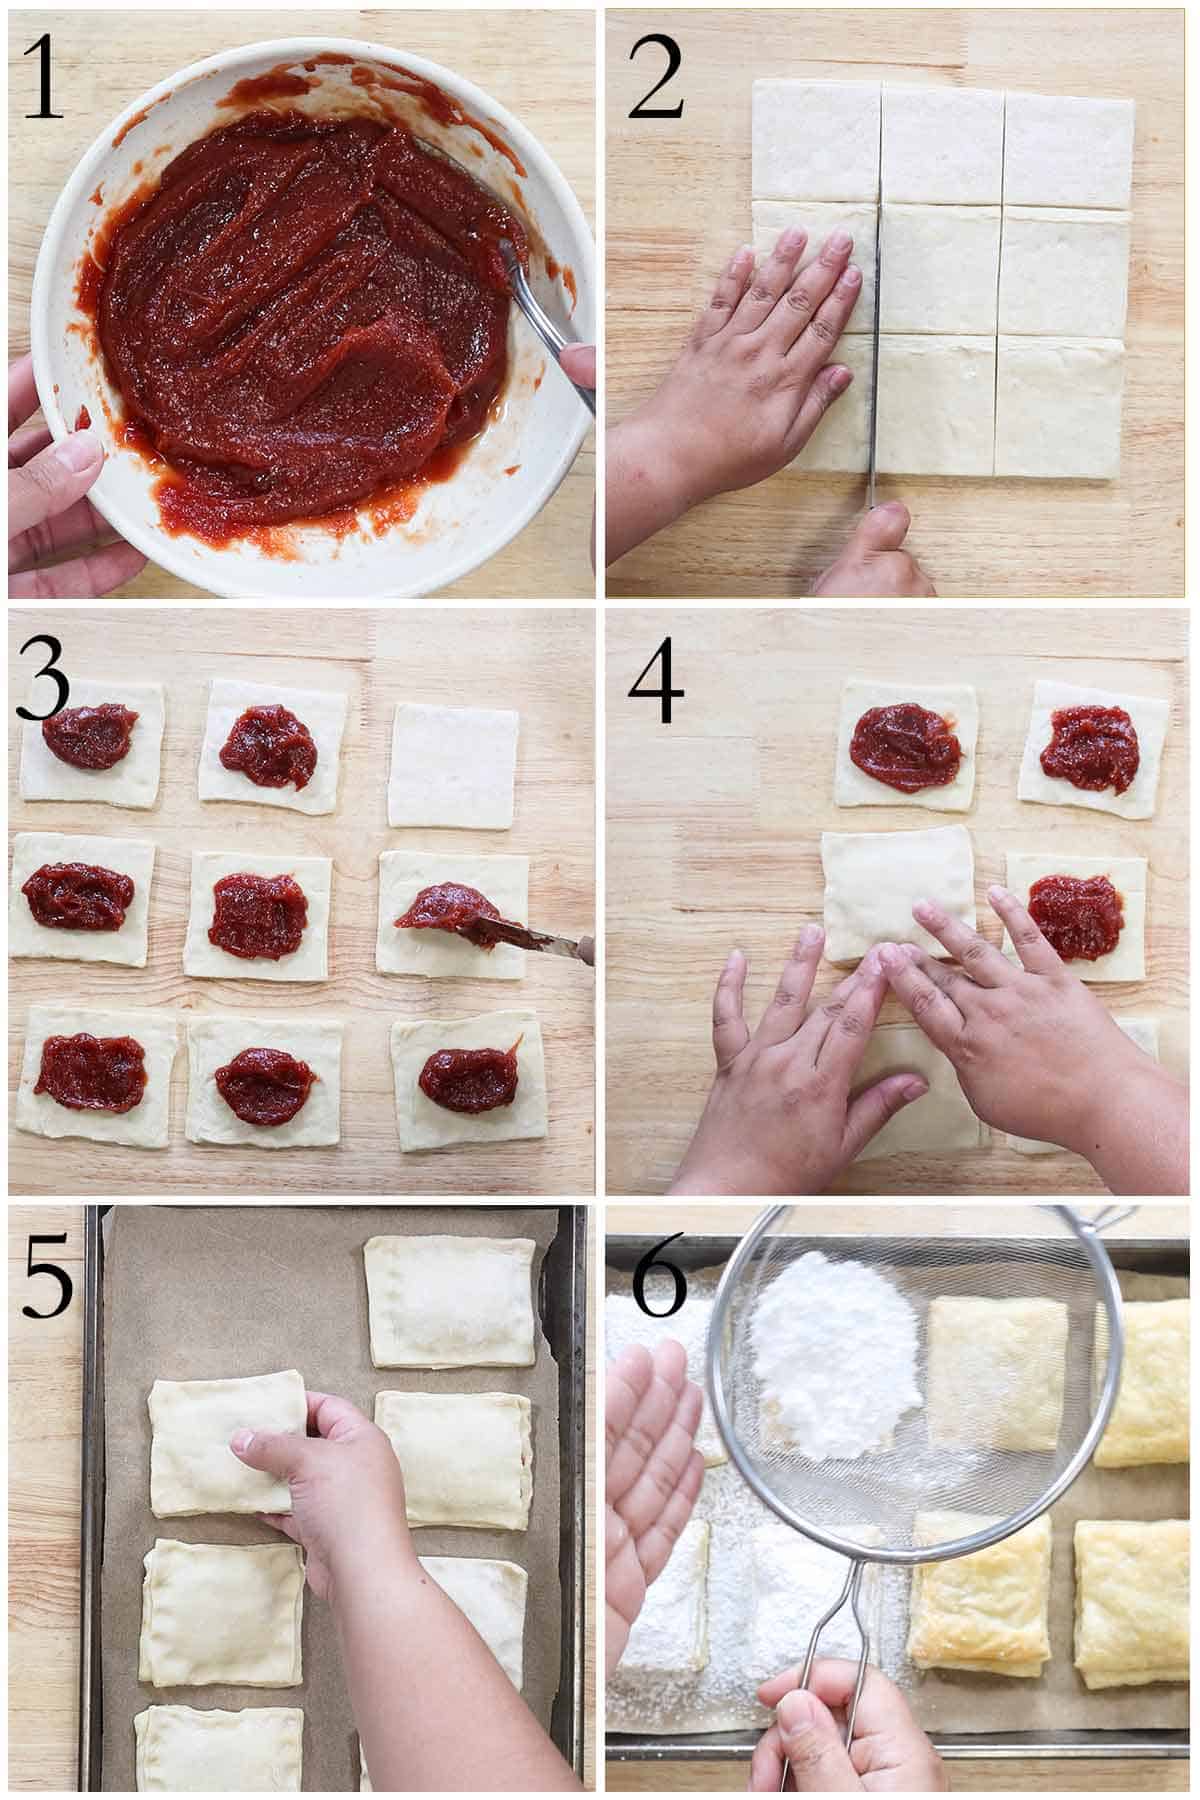 steps 1-6 on how to make pastelillos de guayaba.